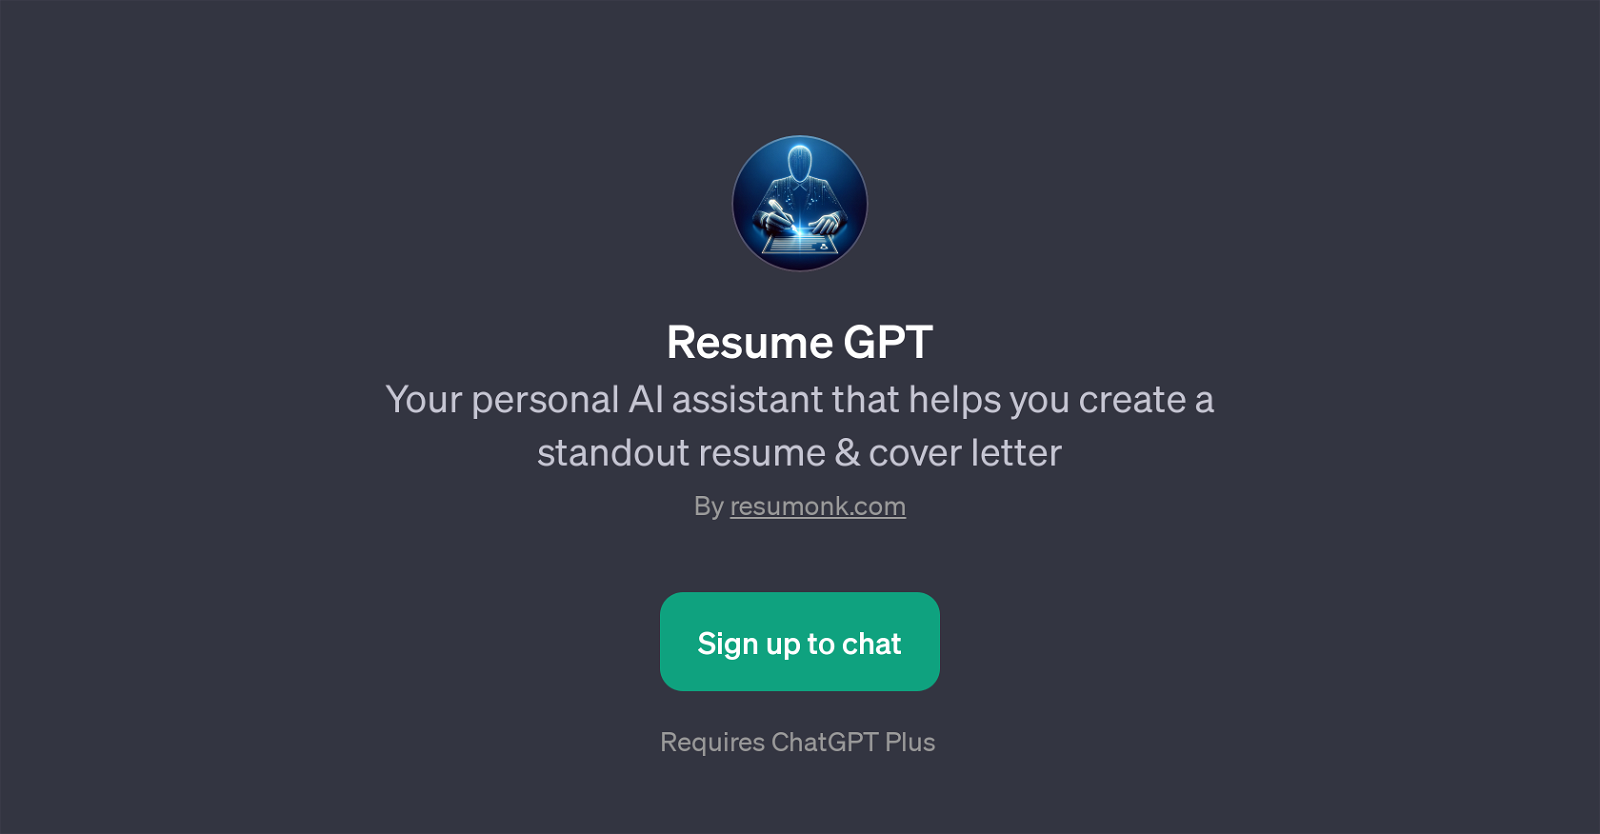 Resume GPT website